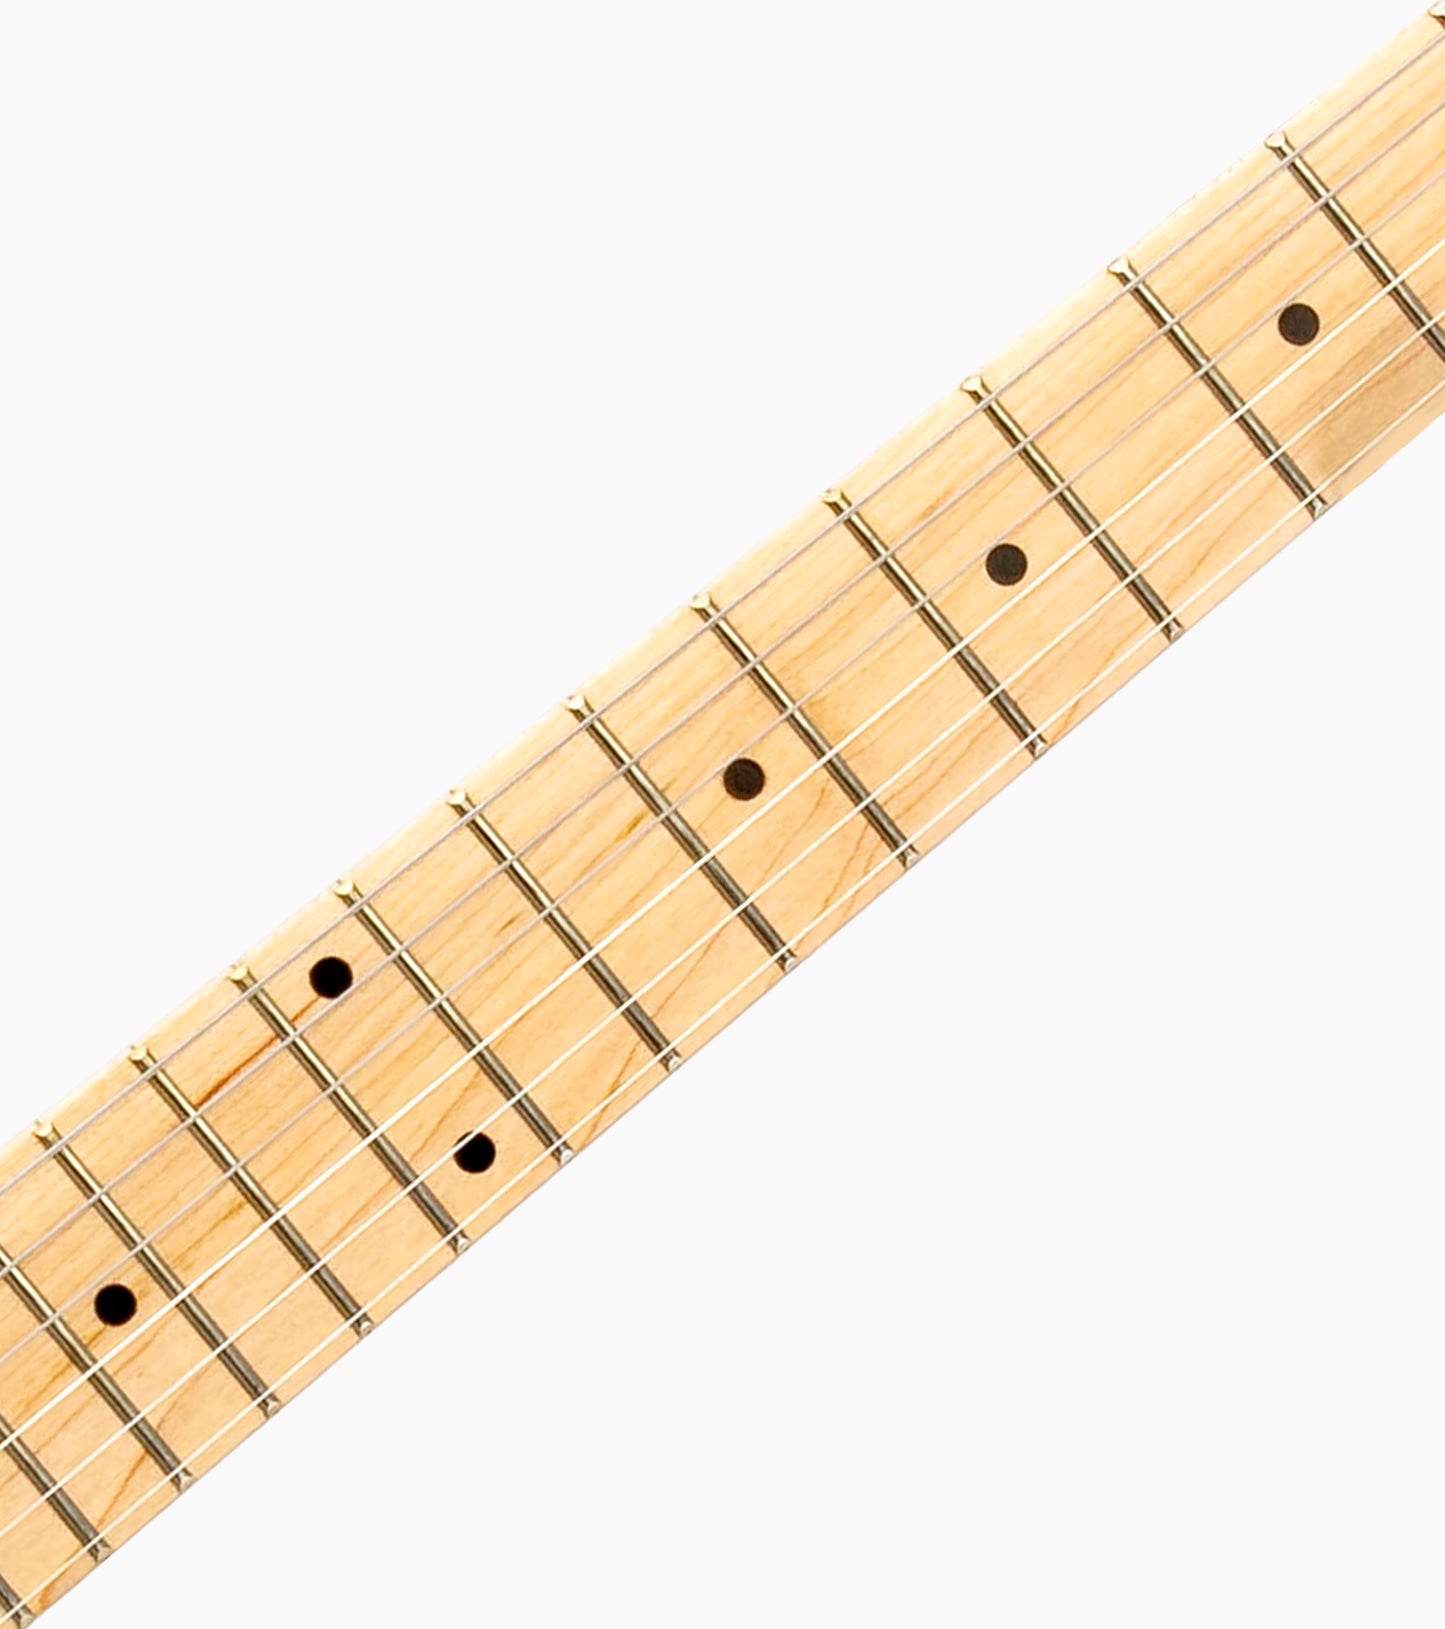 close-up of Sunburst single-cutaway electric guitar fretboard